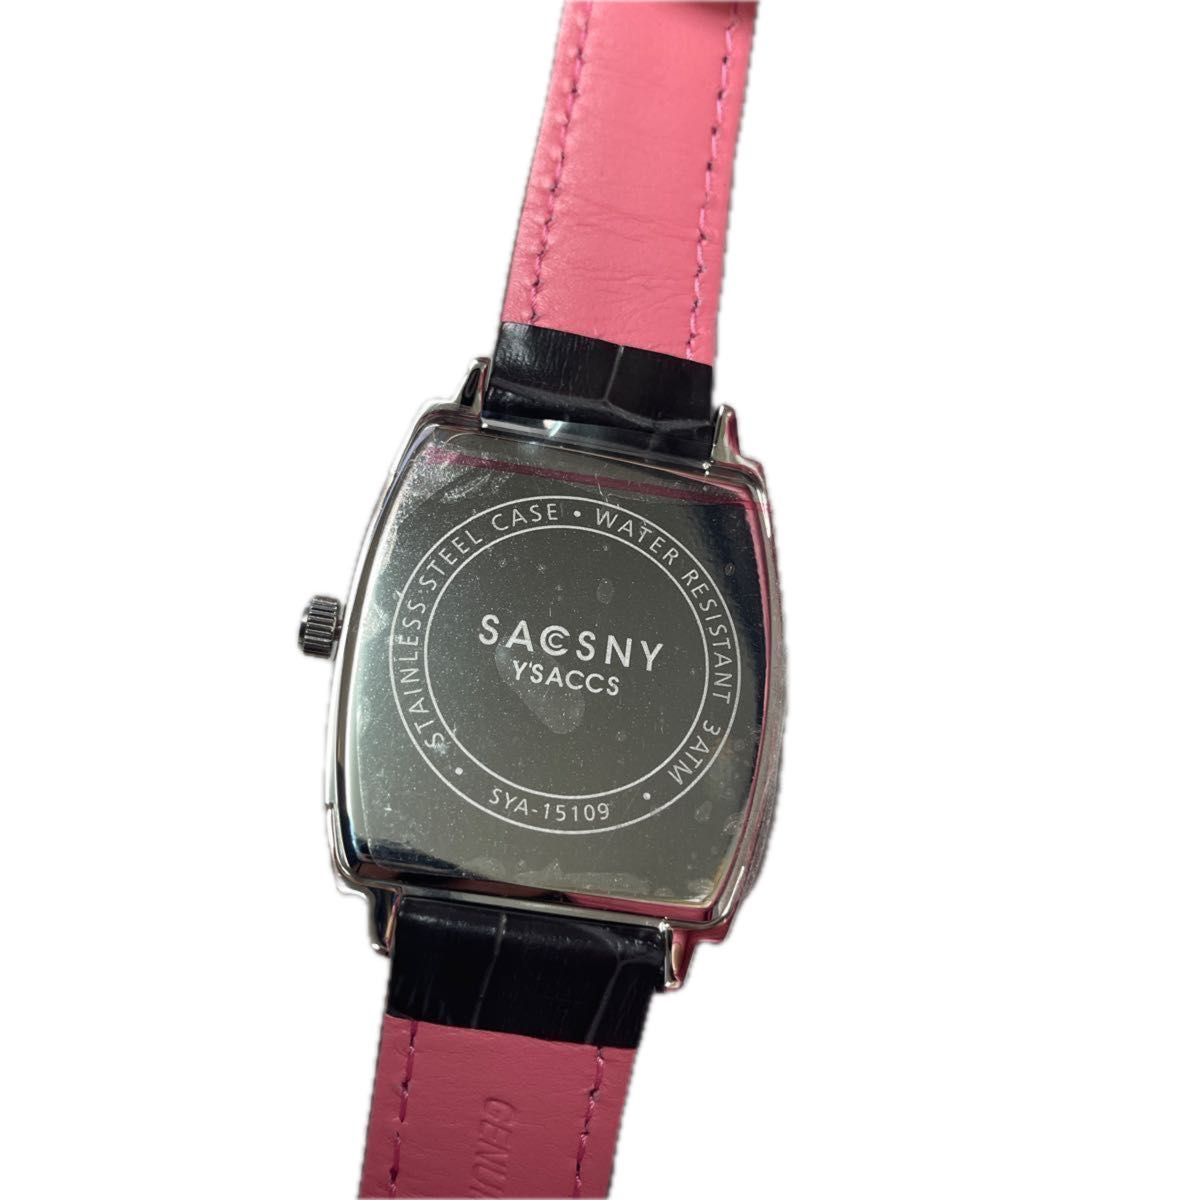 SACSNY Y'SACCS　メンズ　立体文字盤　ビッグフェイスWATCH 腕時計